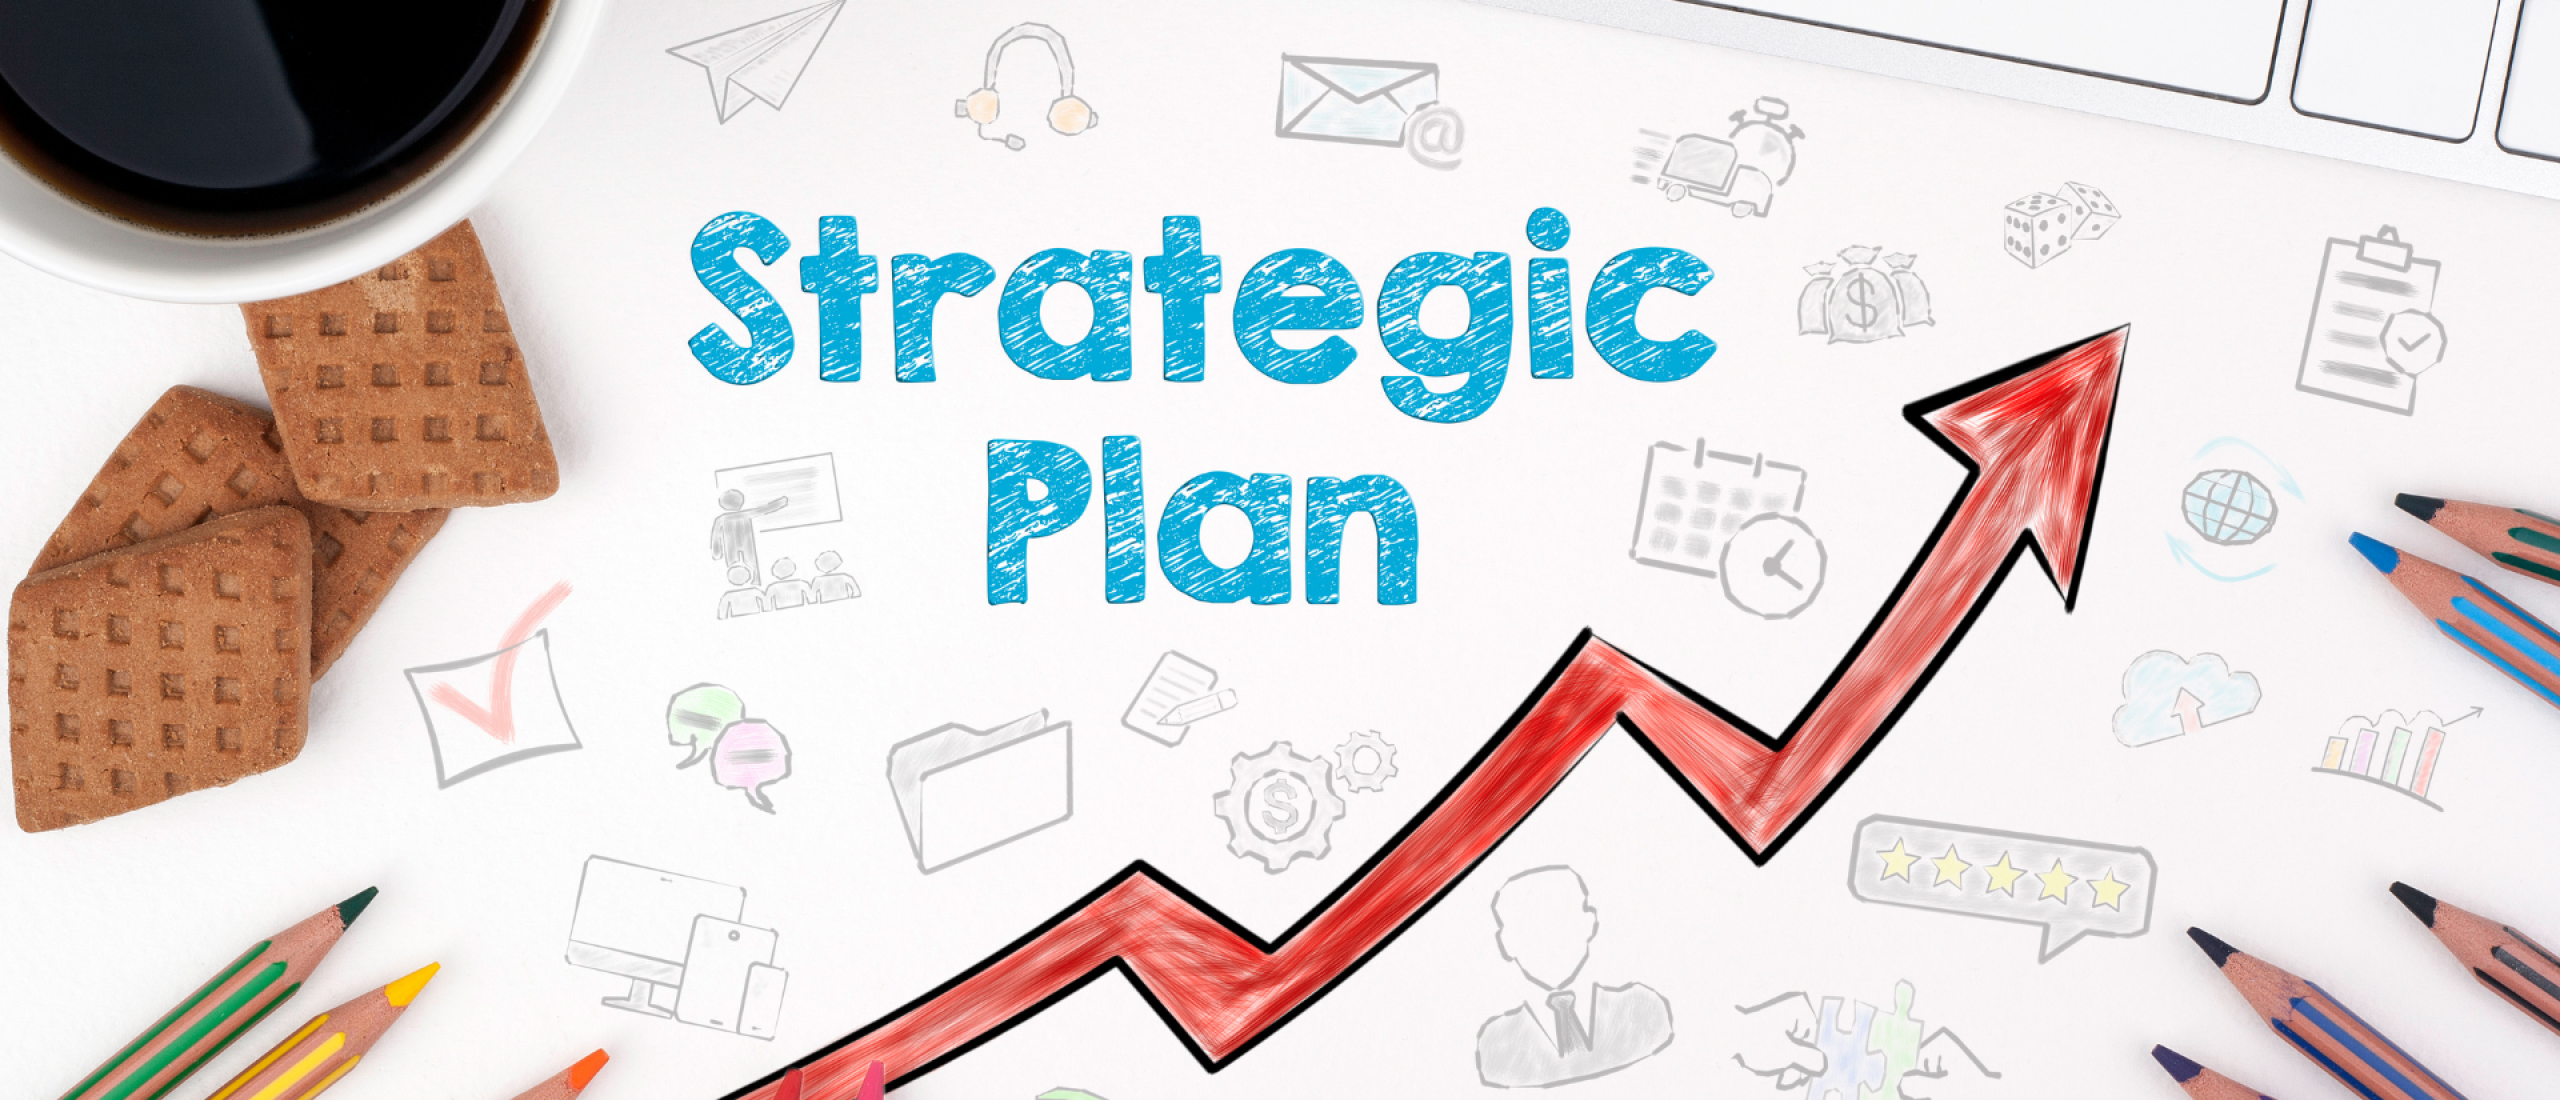 Strategic Growth through a Step-by-Step Approach